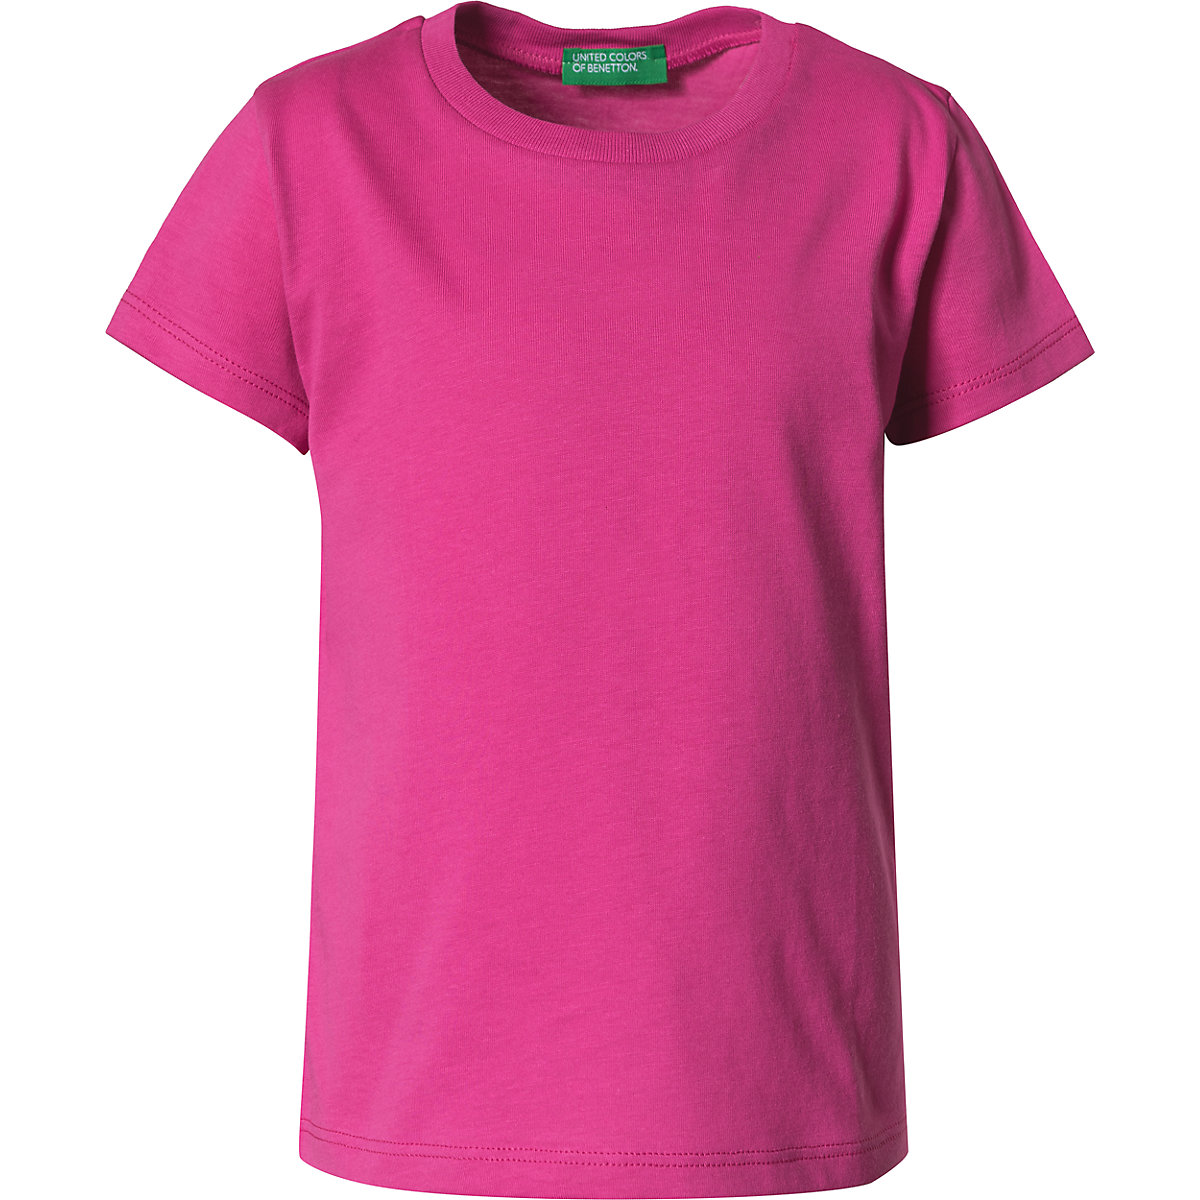 United Colors of Benetton T-Shirt für Mädchen fuchsia